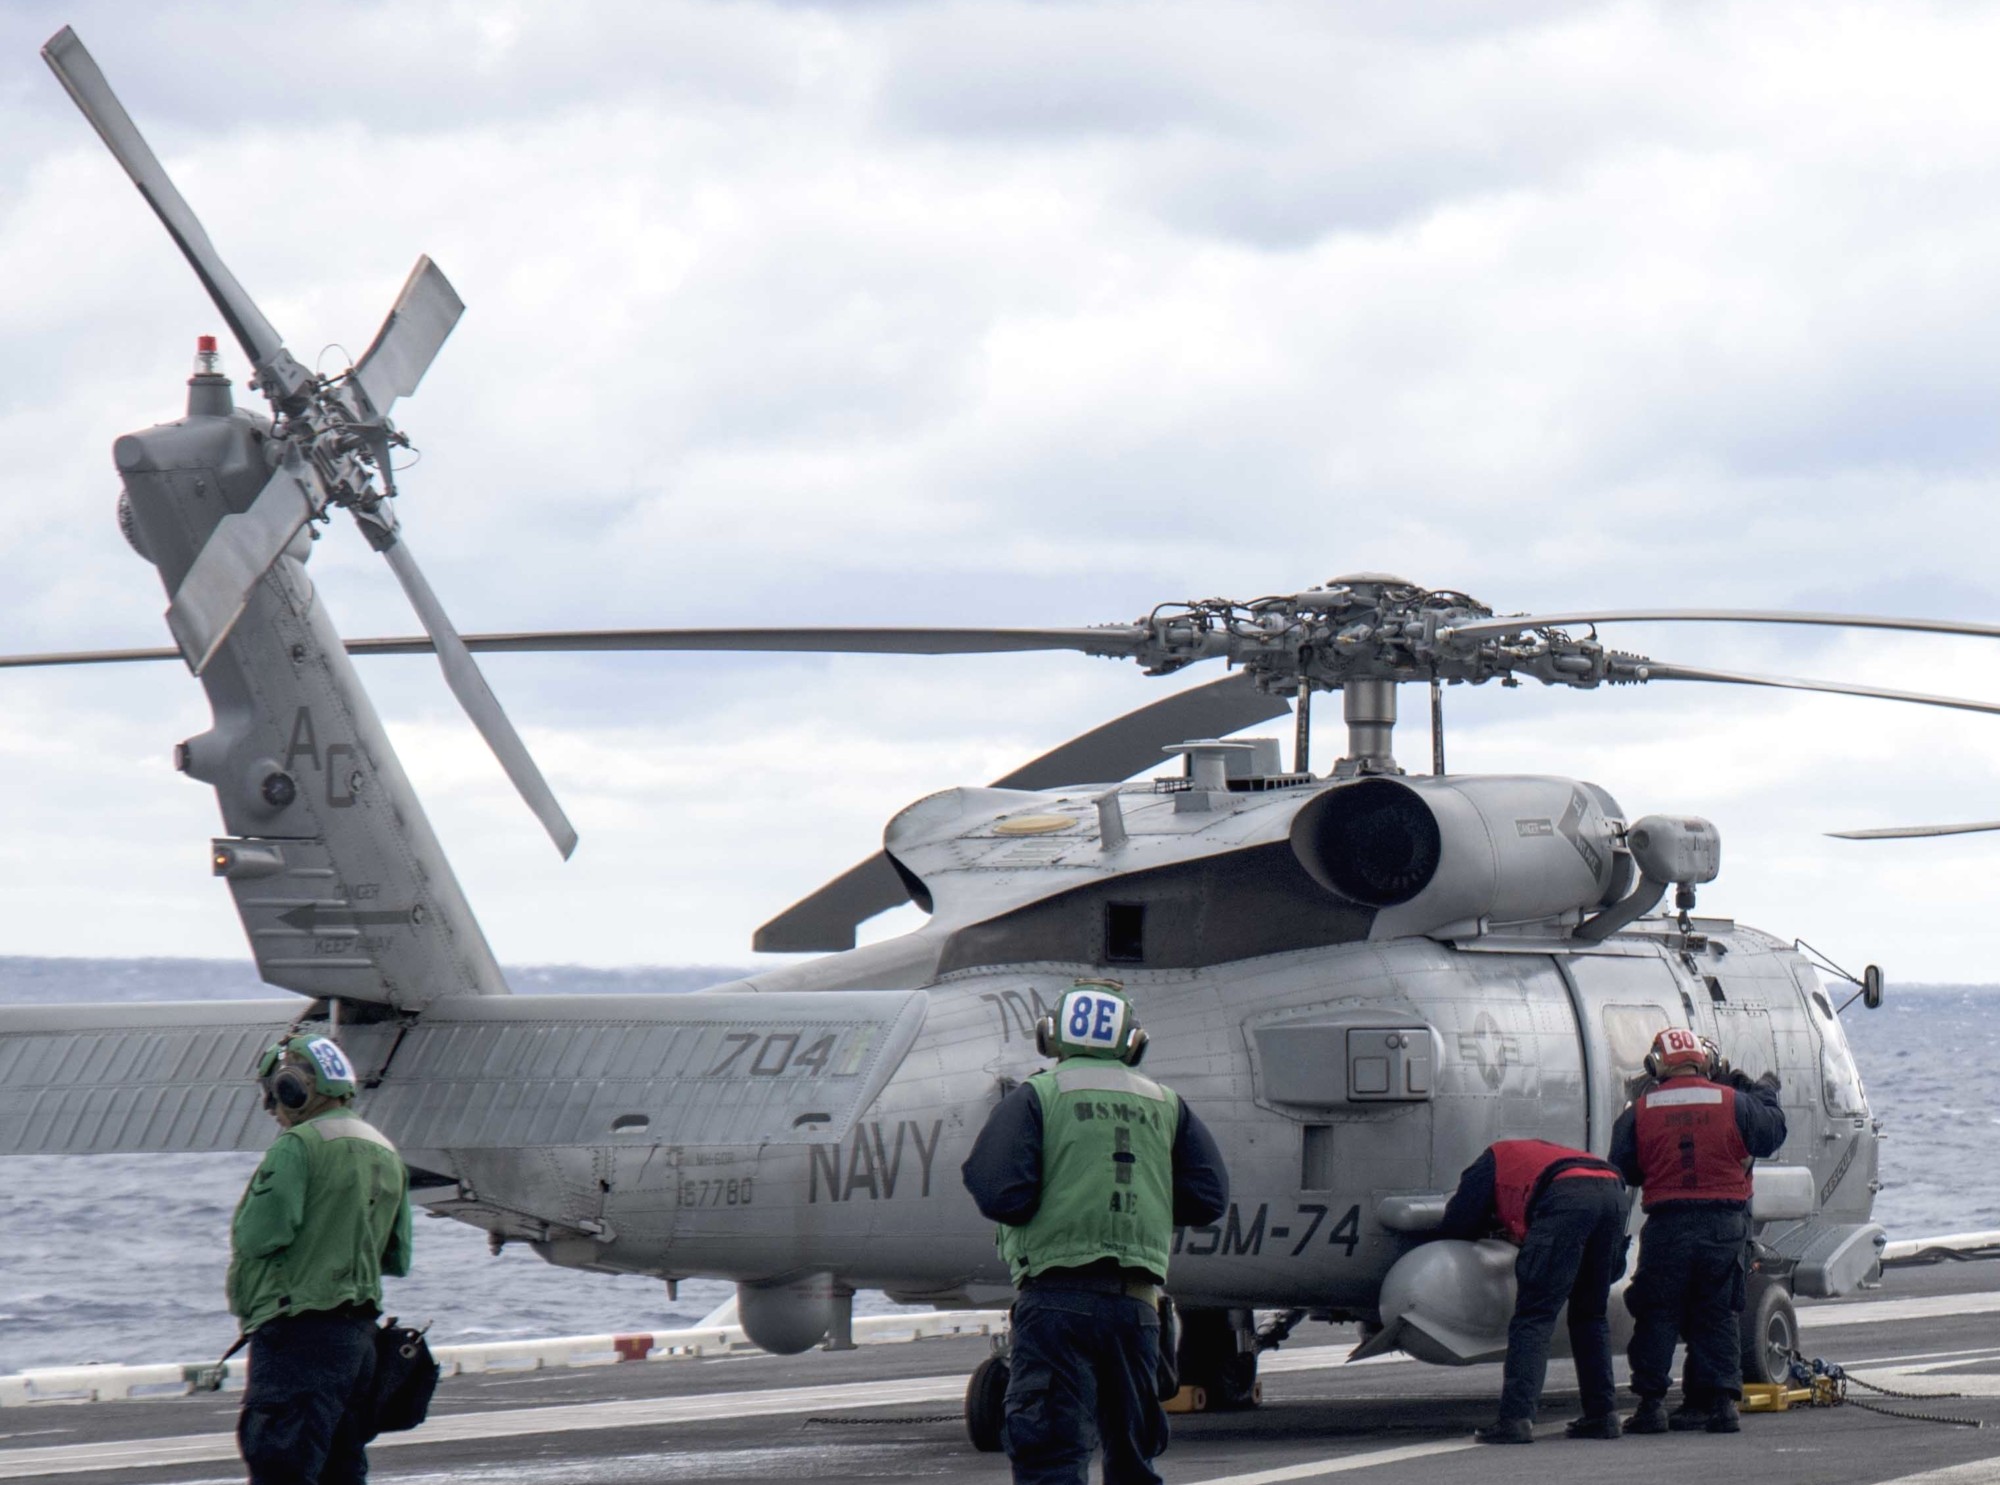 hsm-74 swamp foxes helicopter maritime strike squadron mh-60r seahawk cvw-3 cvn-69 uss dwight d. eisenhower 08